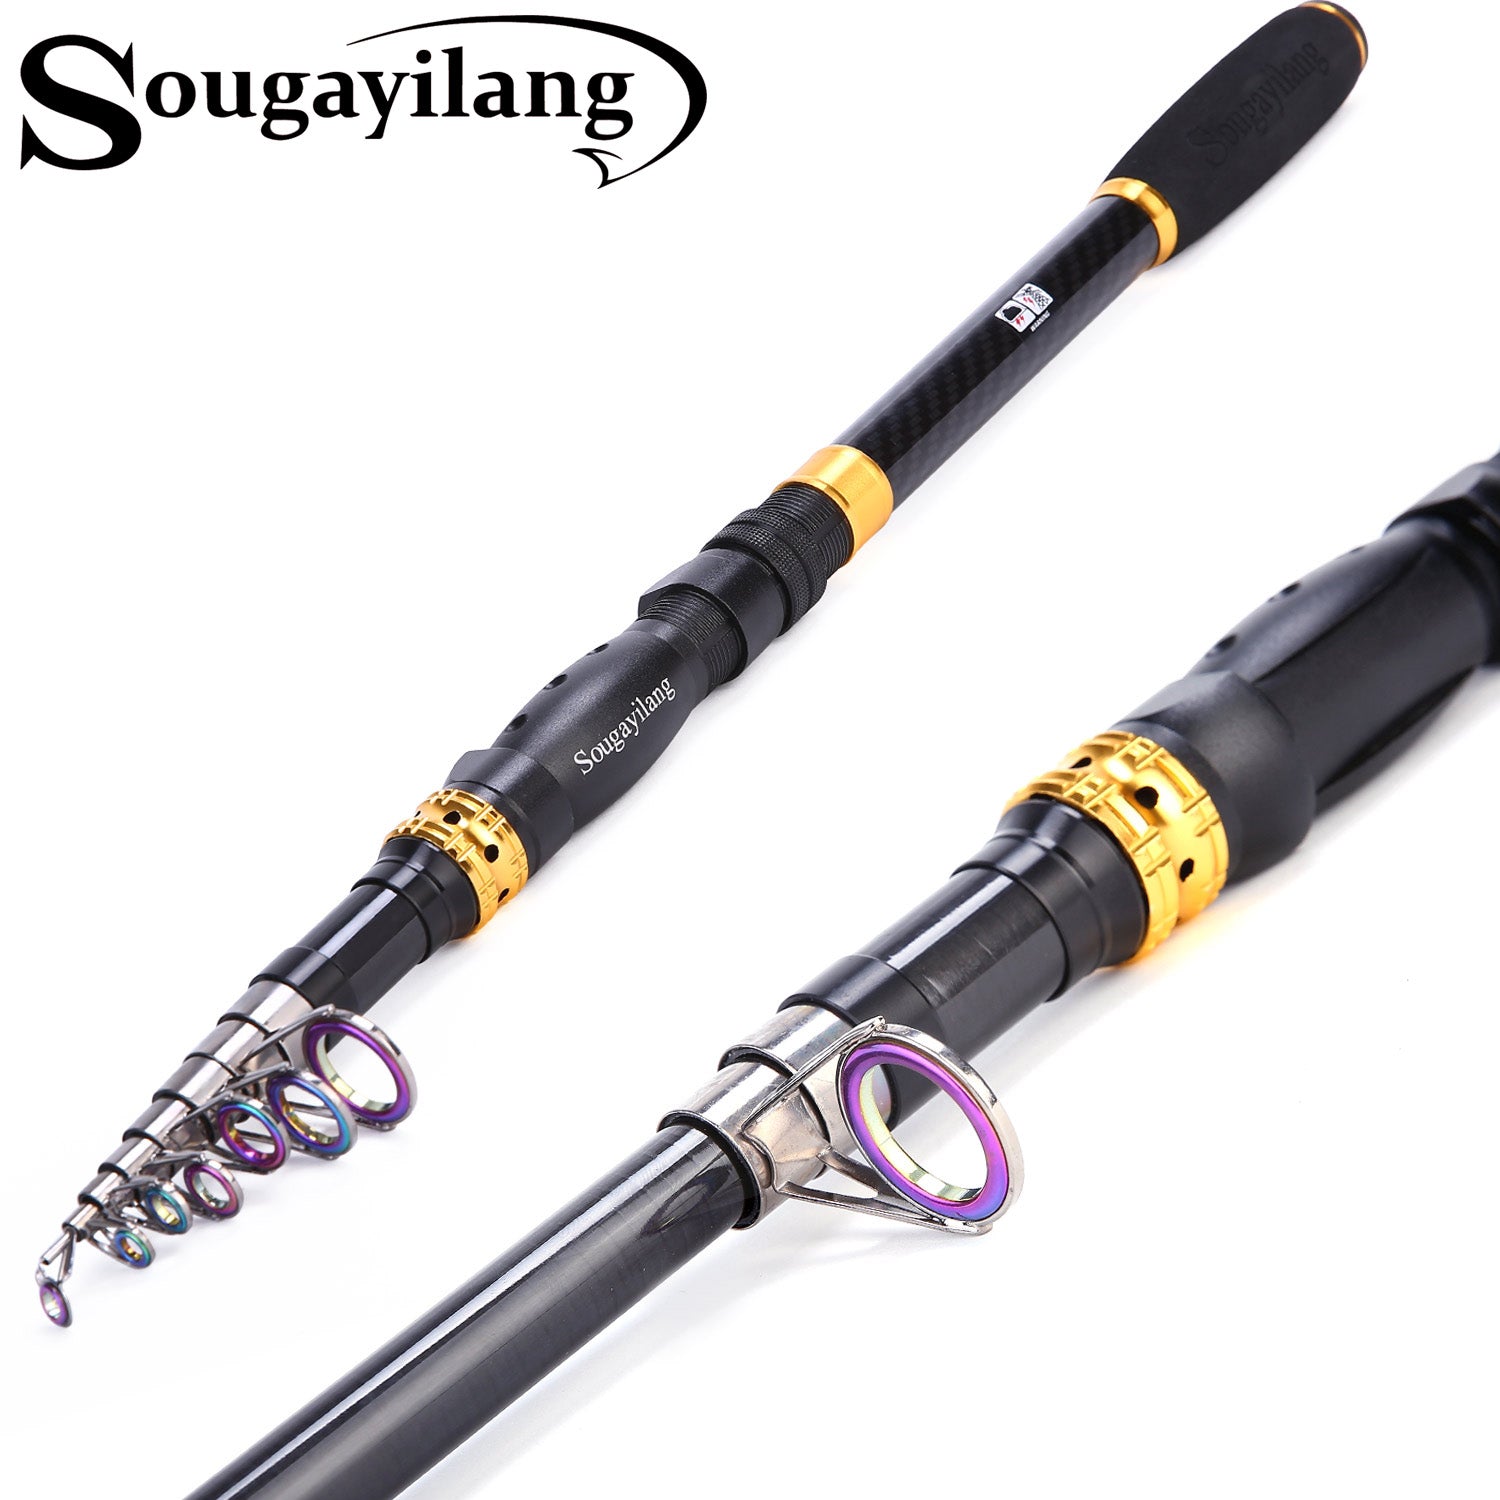 Sougayilang Telescopic Fishing Rod - 24 Ton Carbon Fiber Ultralight F